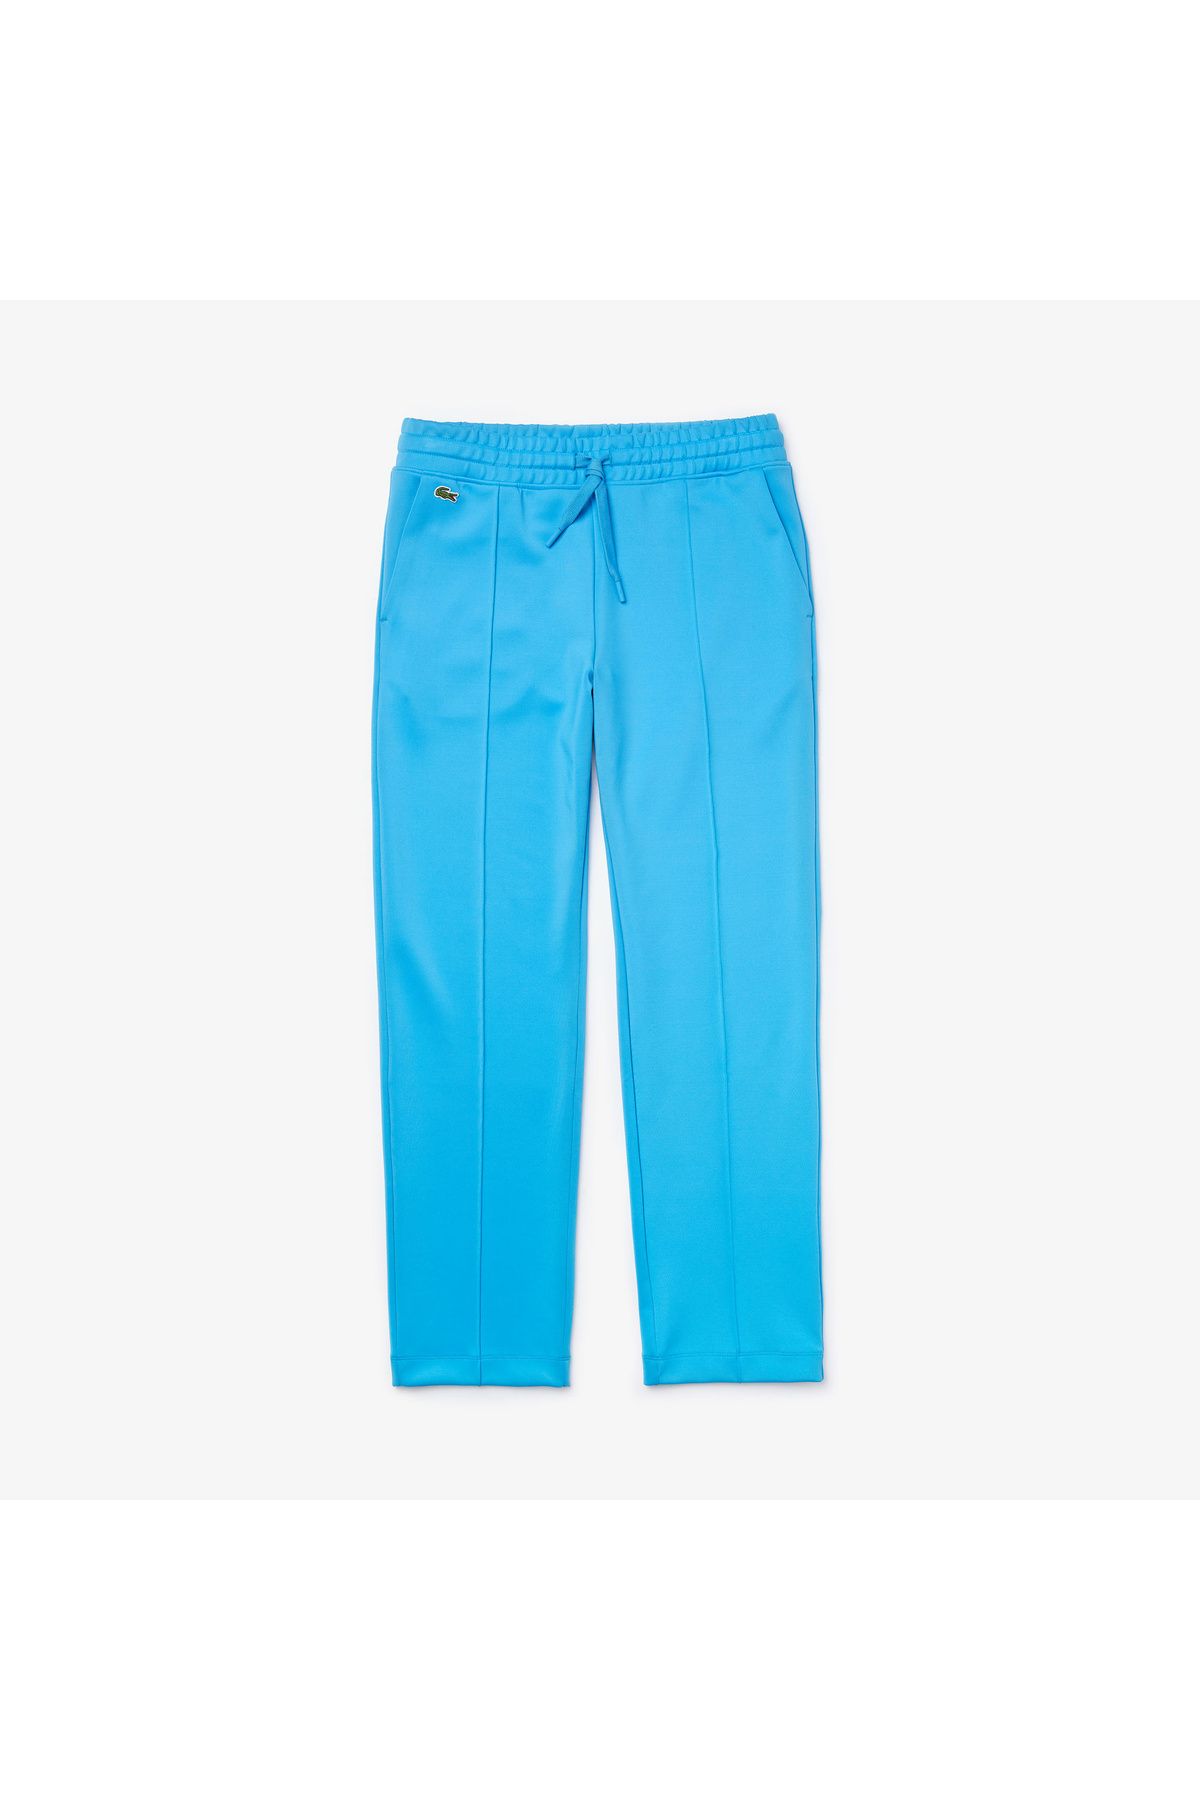 Lacoste Kadın Mavi Pantolon